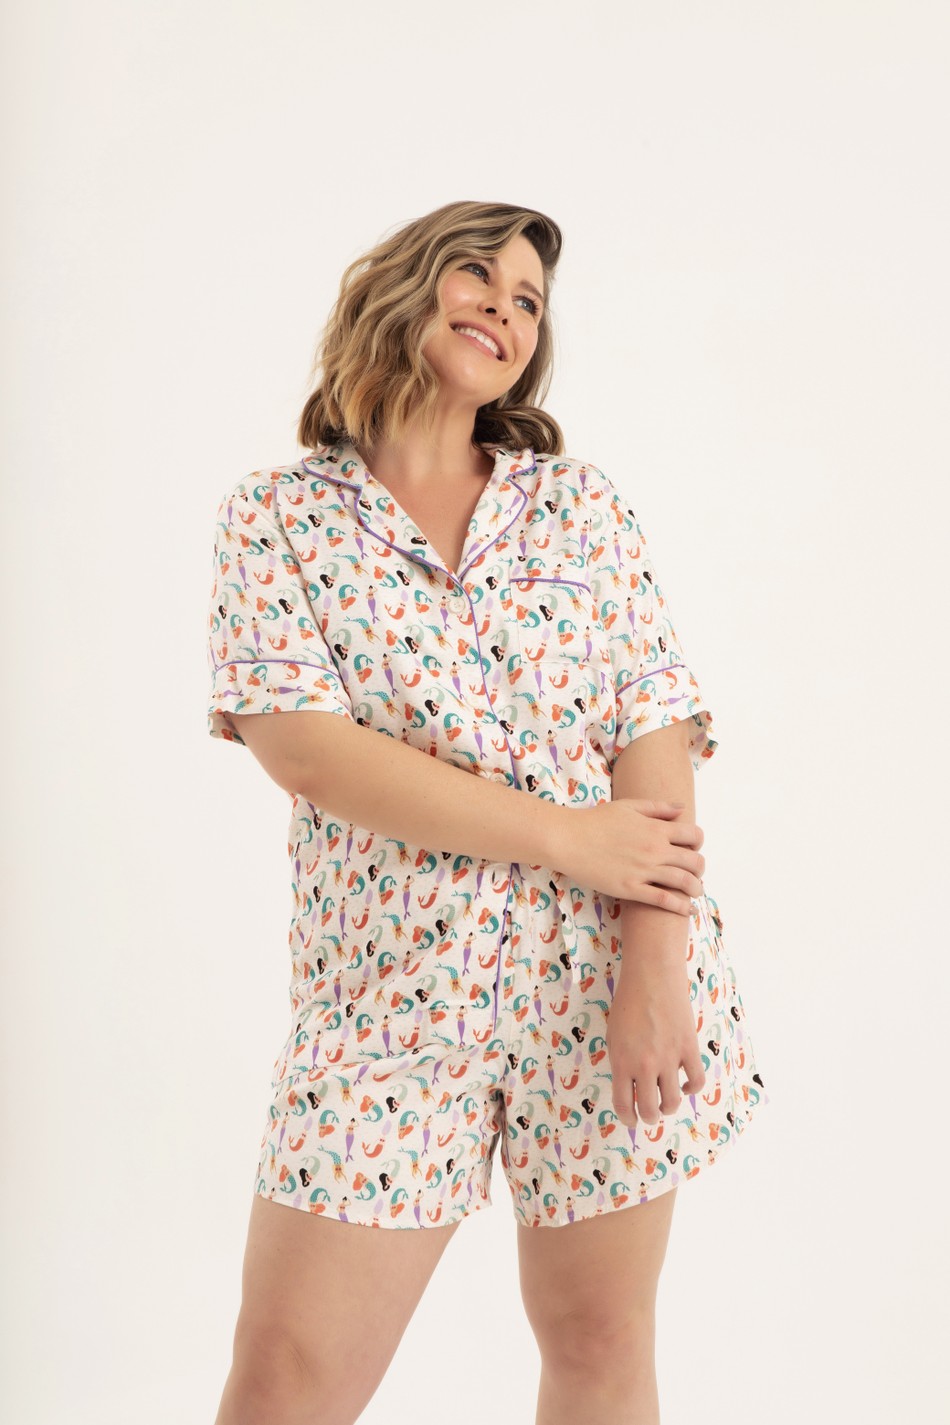 Pijama Clara Sereiando